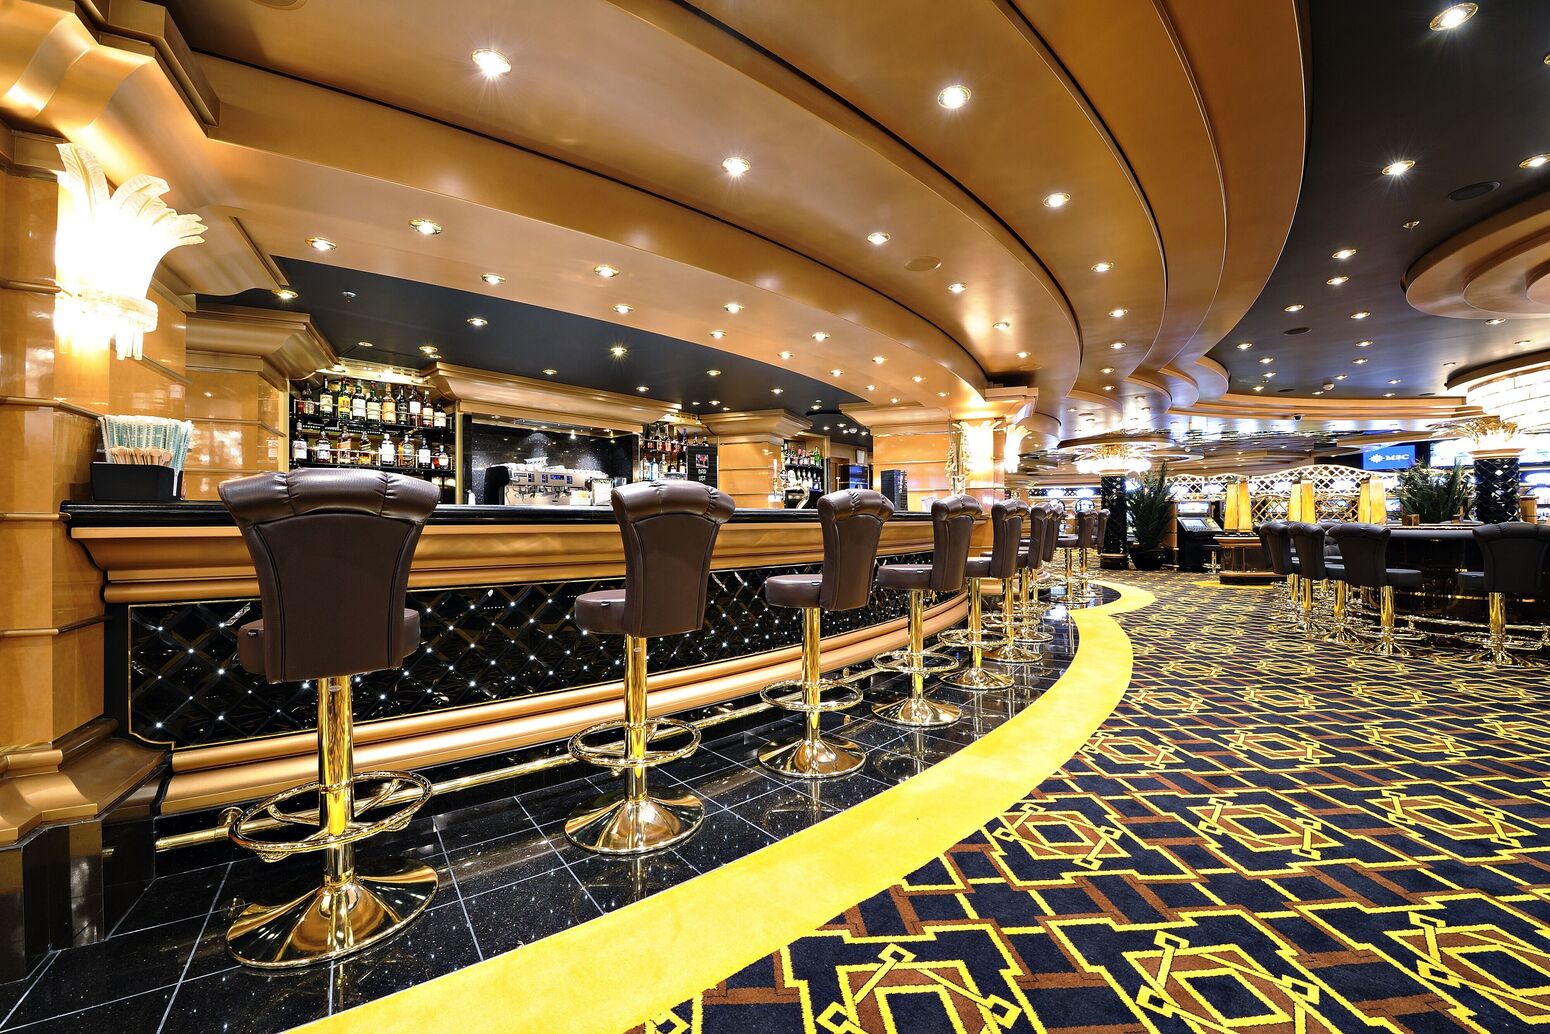 Casino, Royal Palm Casino, Ship, Entertainment, Fantasia Class, Bar counter, Footstool, MSC Splendida